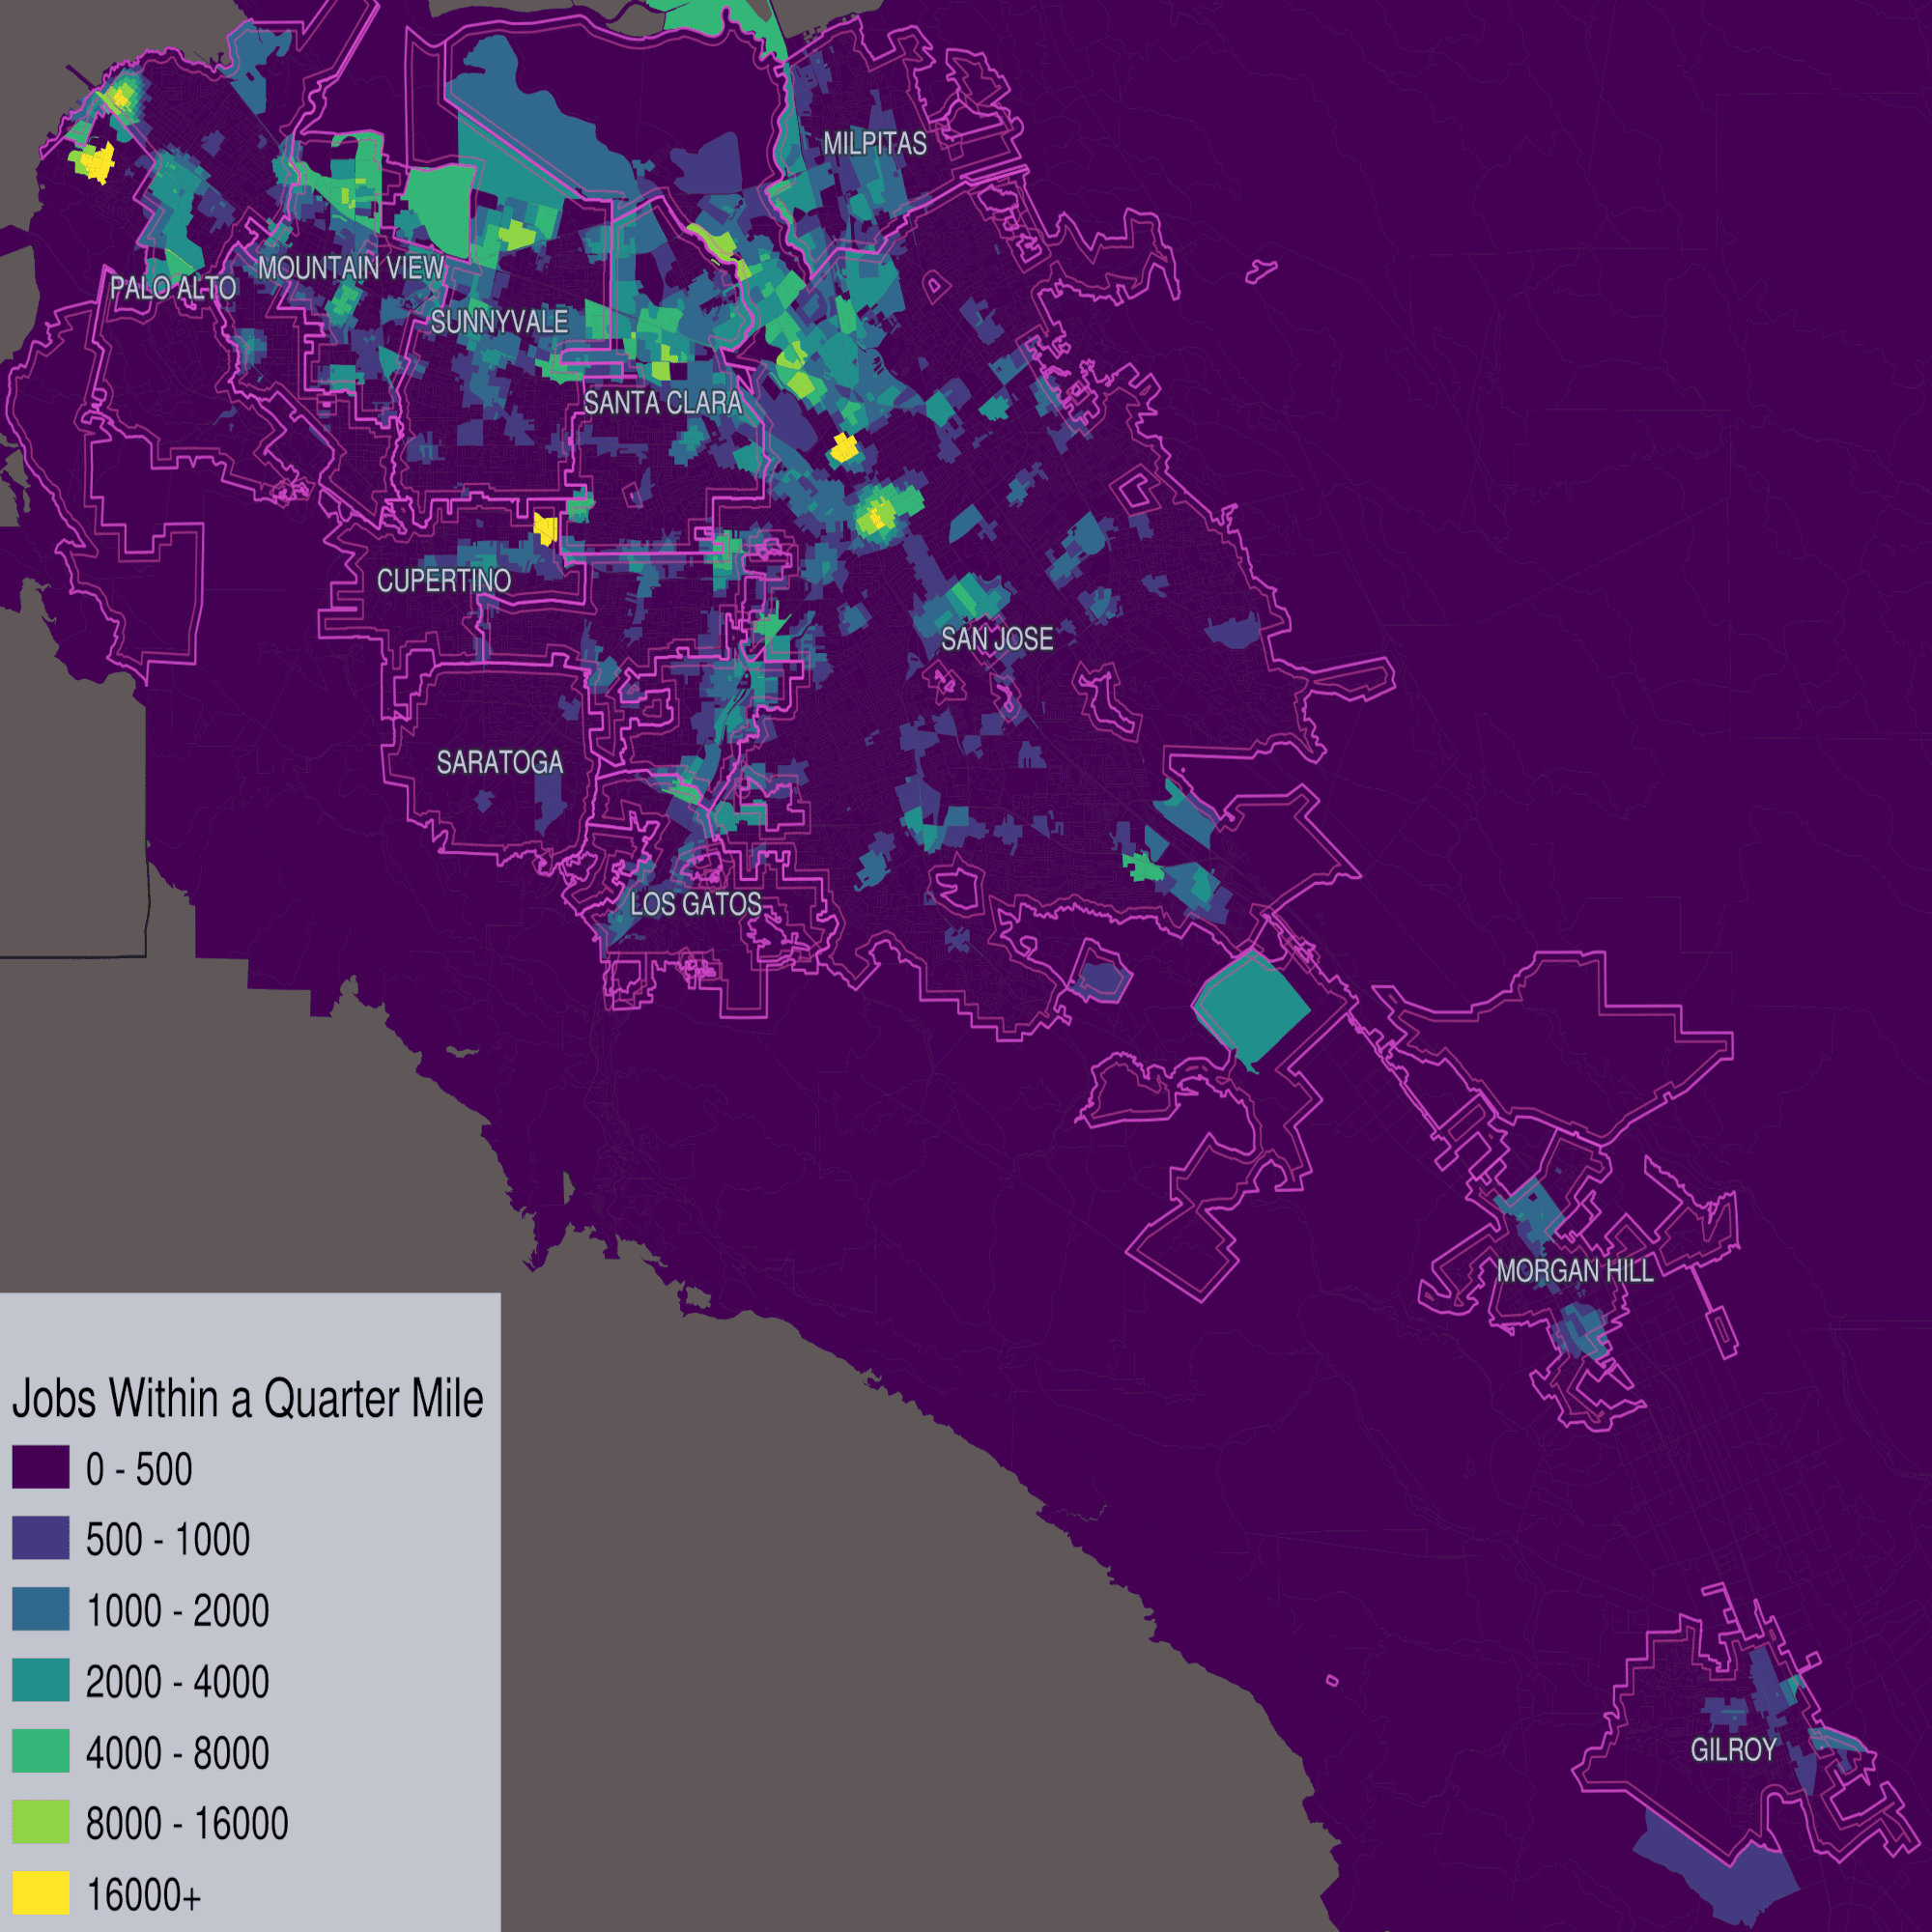 map of jobs in santa clara county